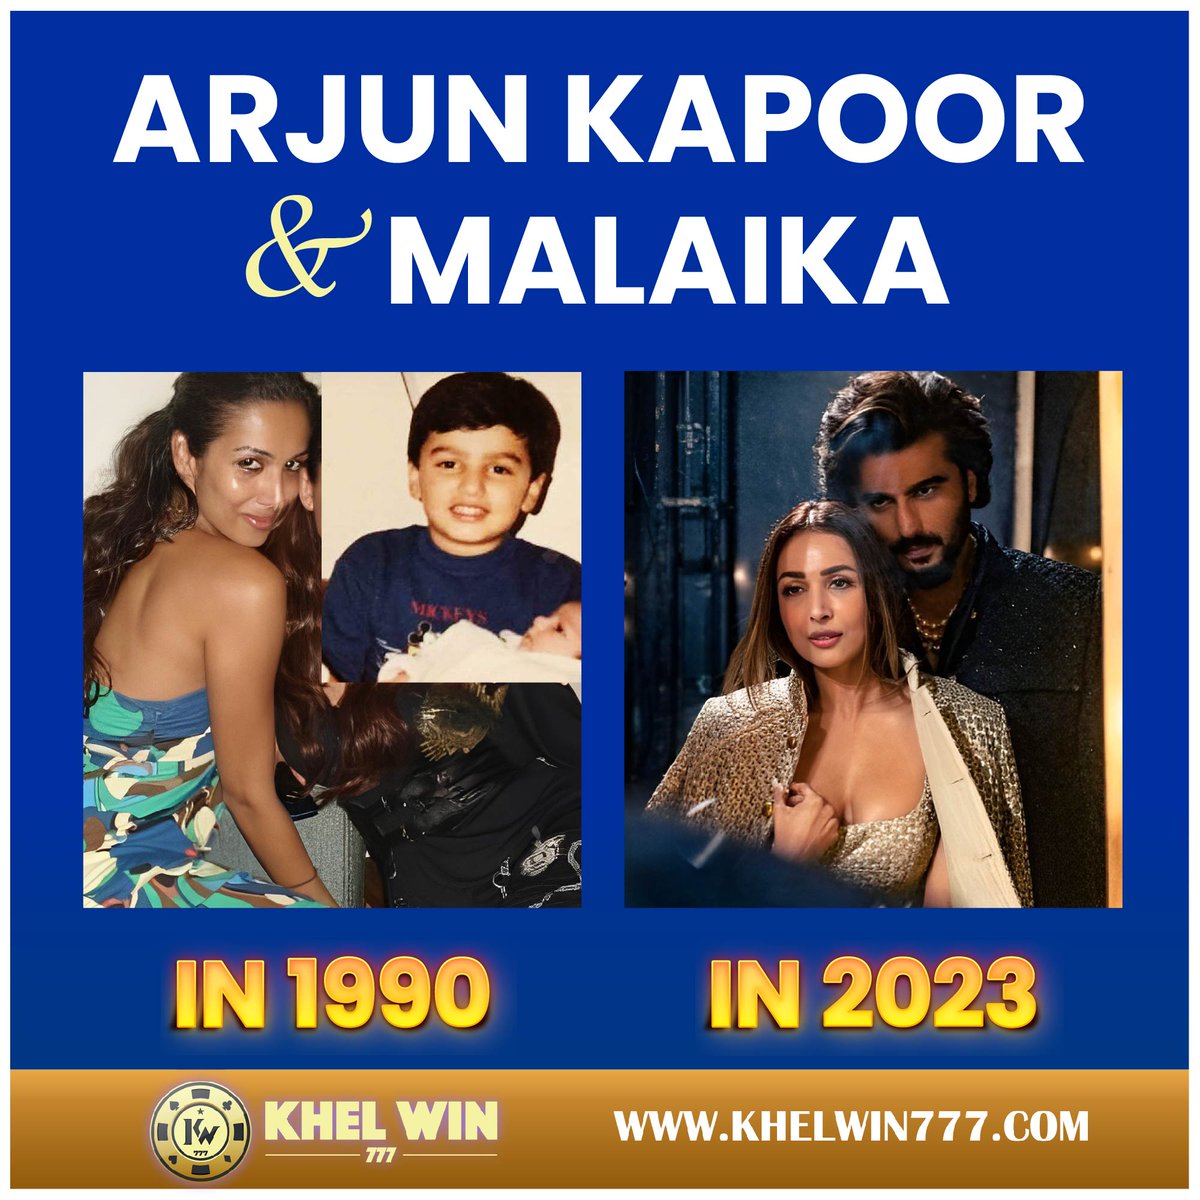 What do you guys think of this Couple? 😁

#ArjunKapoor #MalaikaArora #bollywood #bollywoodcouple